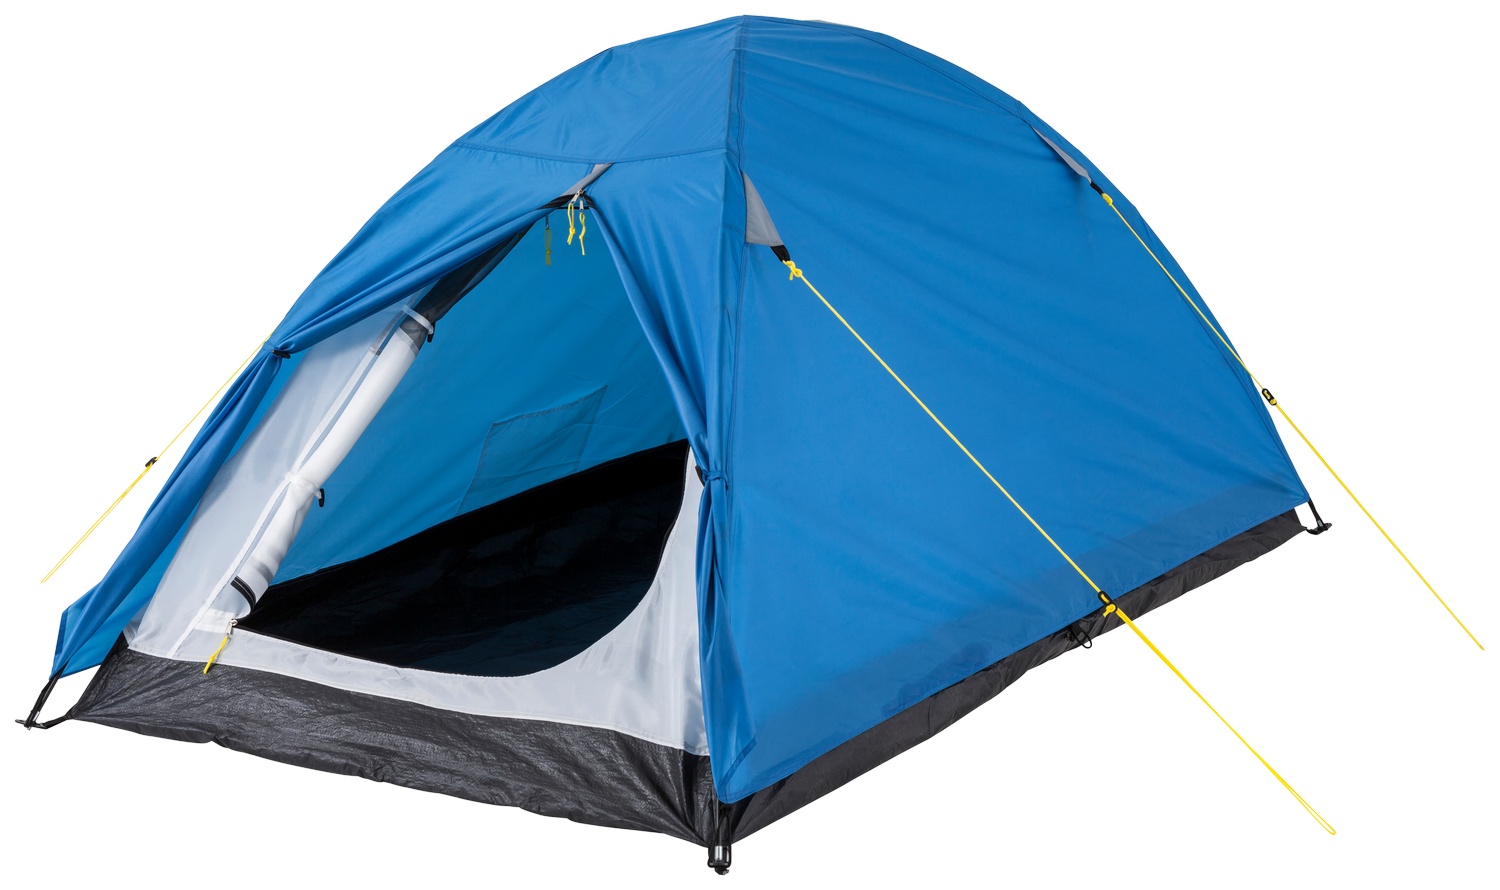 Blue Tent PNG Image